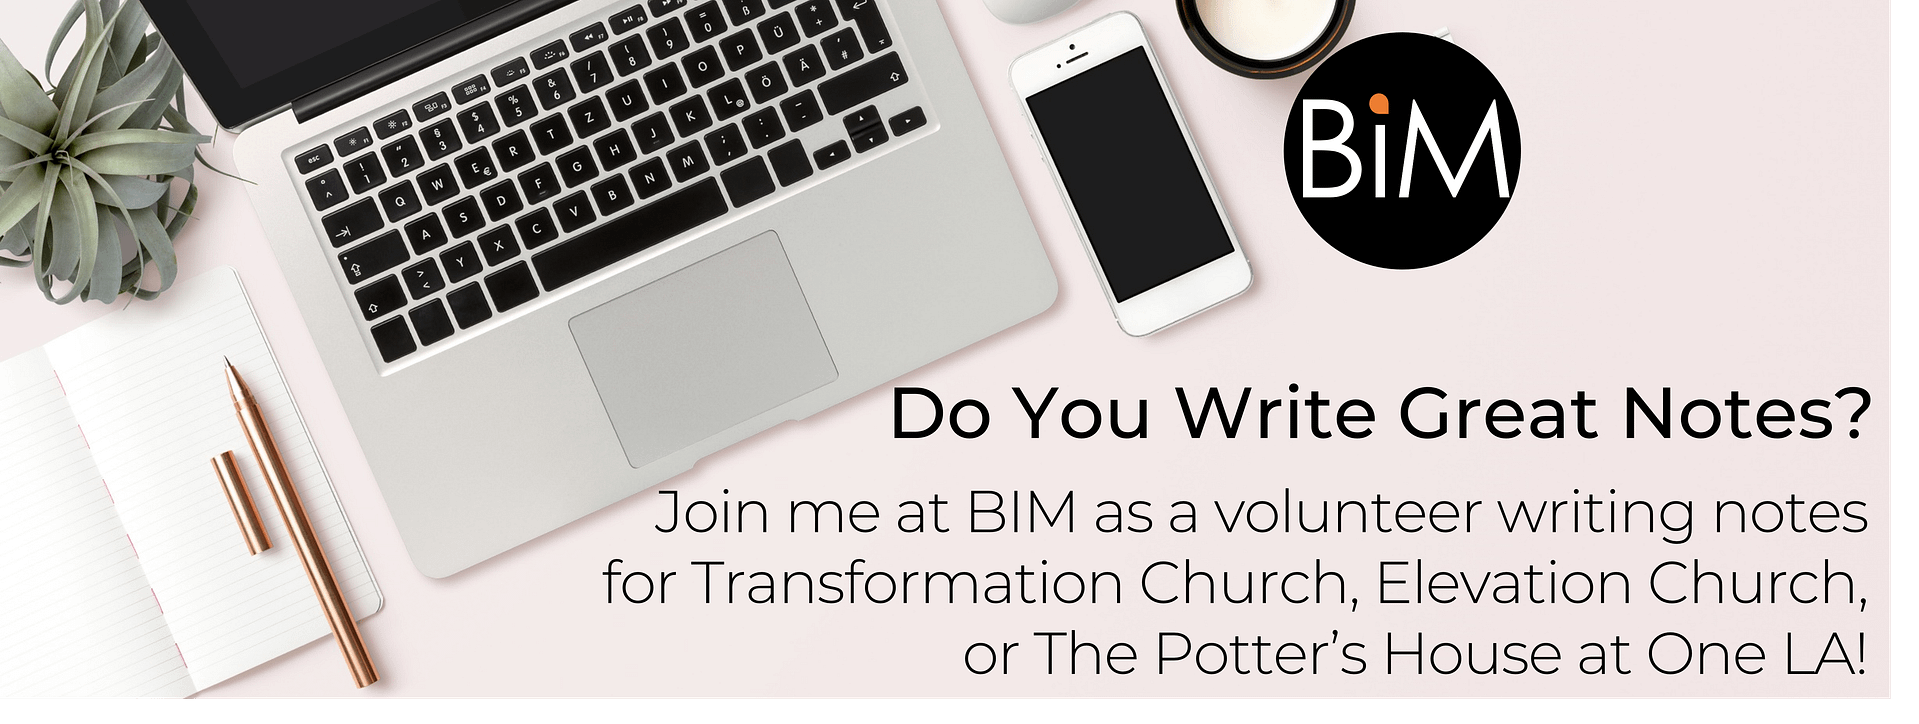 Background Transformation Church Notes - Elevation Church Notes - BIM 5 - Bold Insider Marketing - Volunteer to Help Write Notes